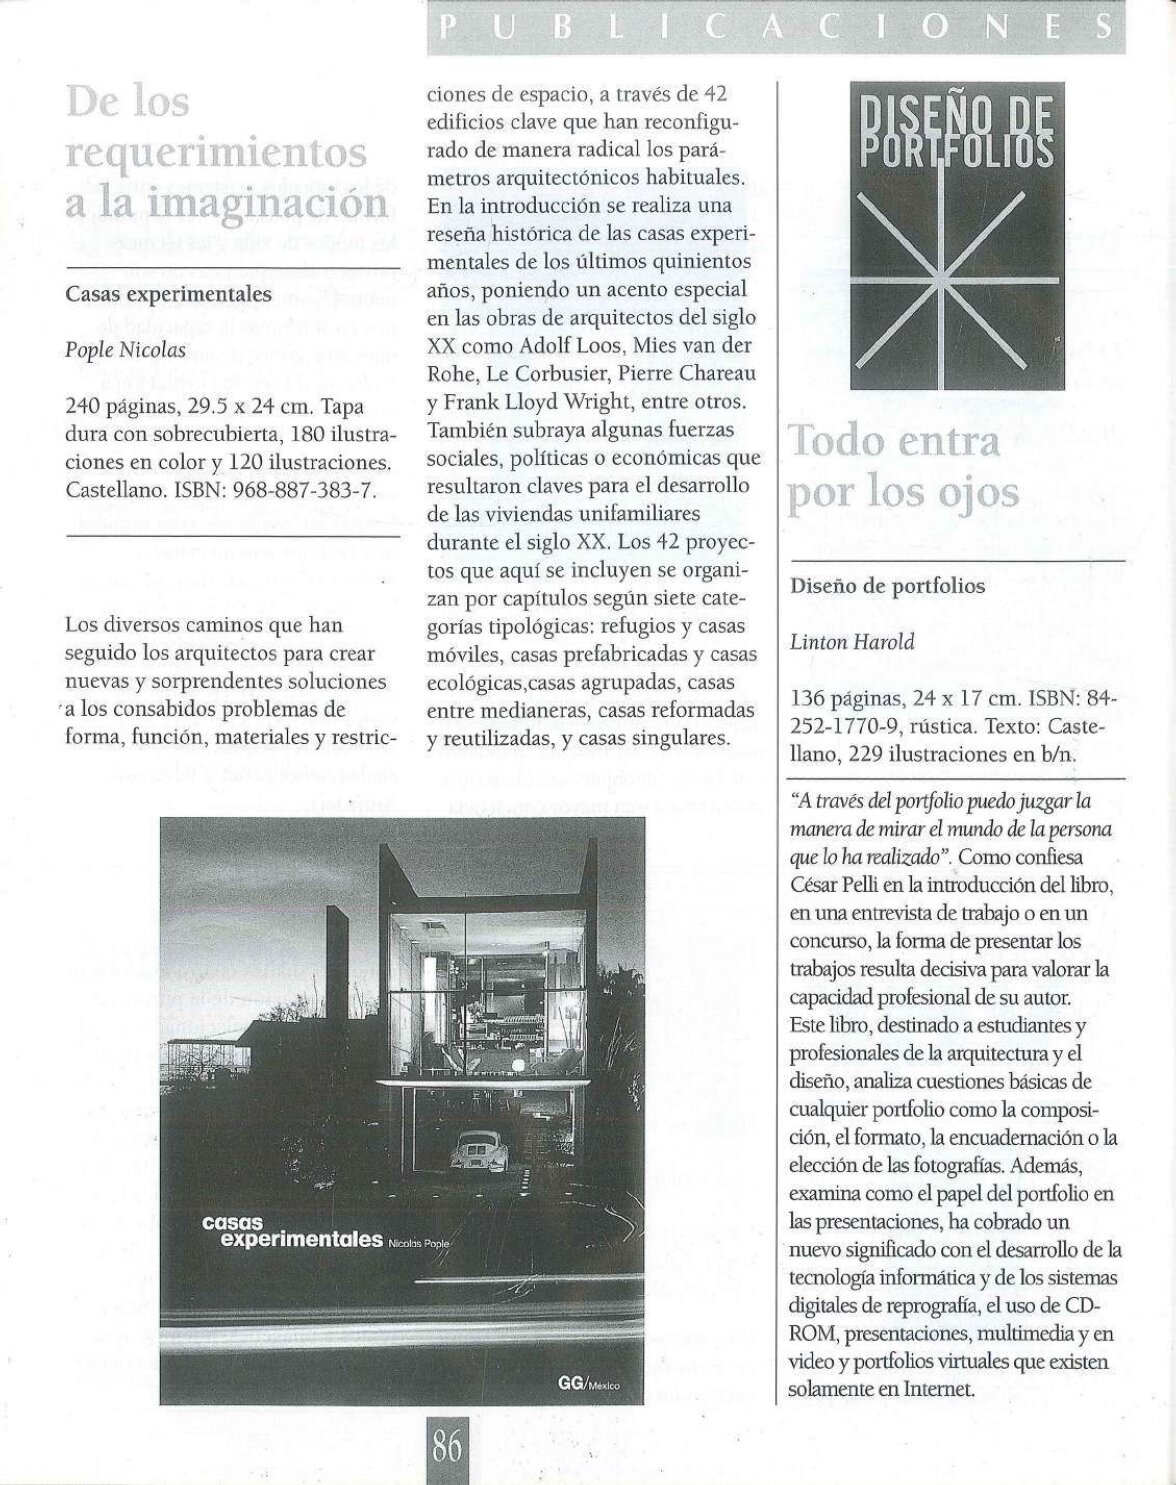 2002_Contexto Urbano- Obra reciente 1995-2002. REVISTA PROA 1_compressed (1)_page-0088.jpg